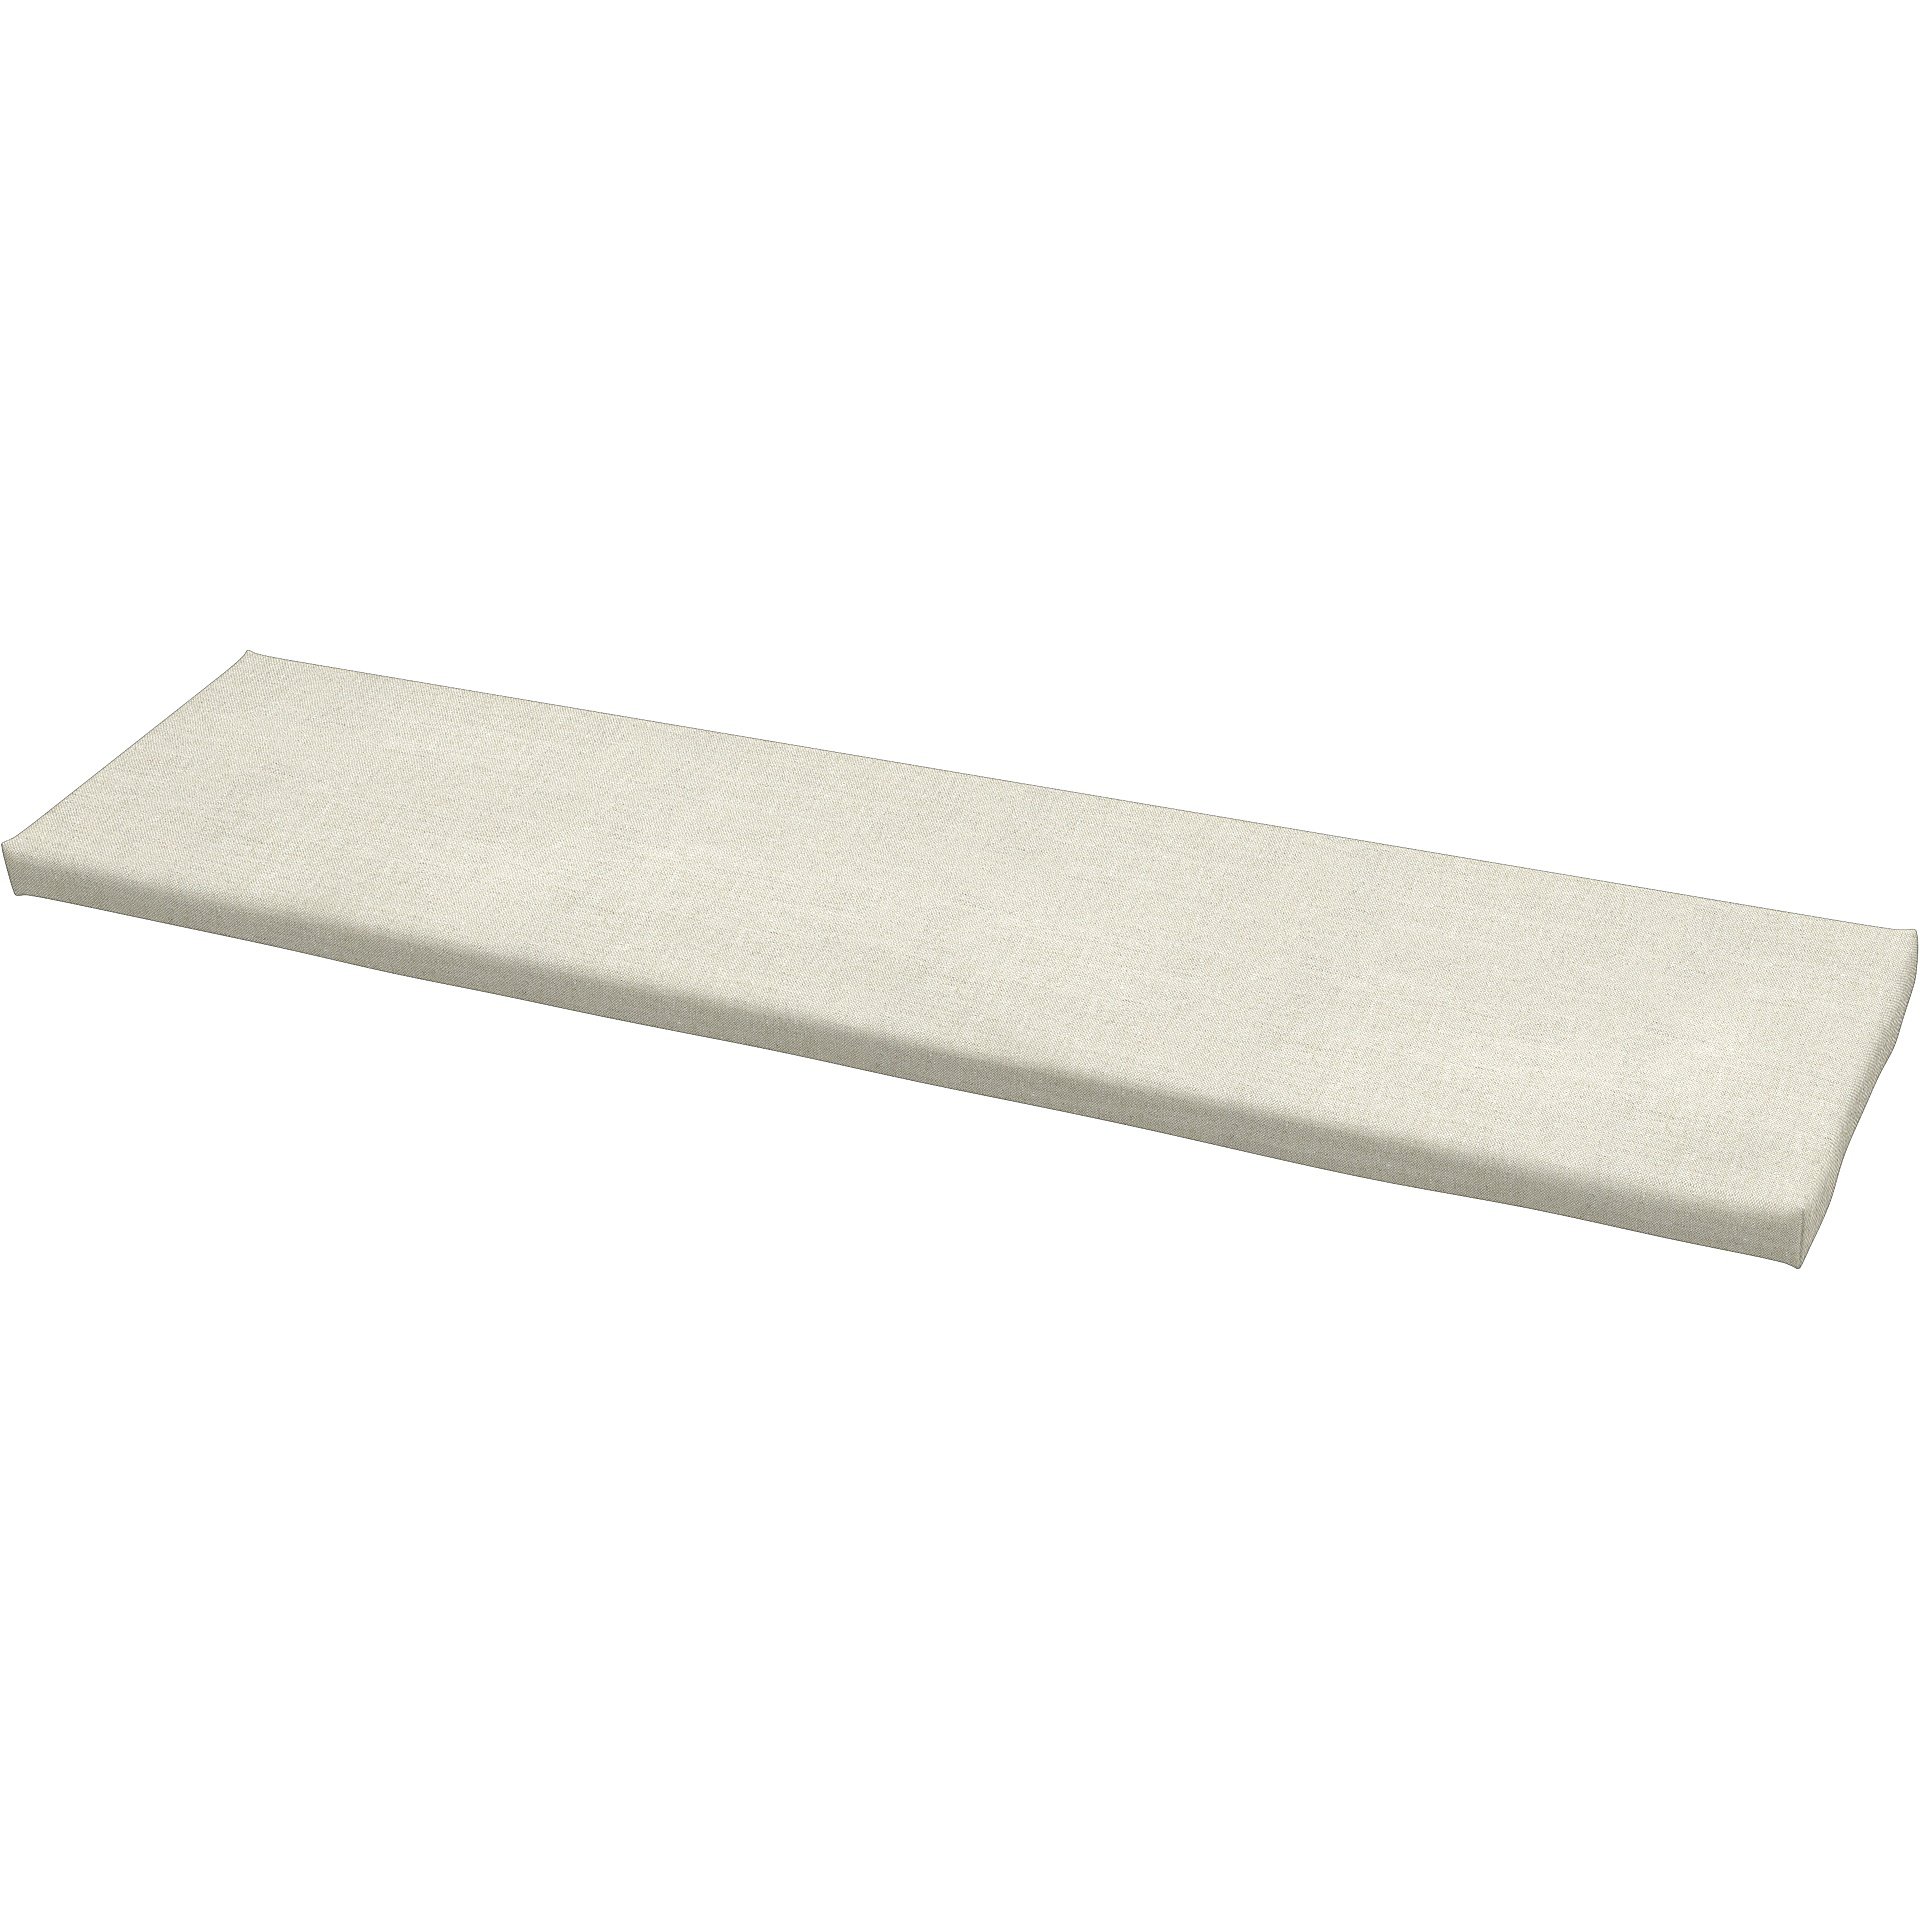 IKEA - Universal bench cushion cover 140x35x3,5 cm, Natural, Linen - Bemz